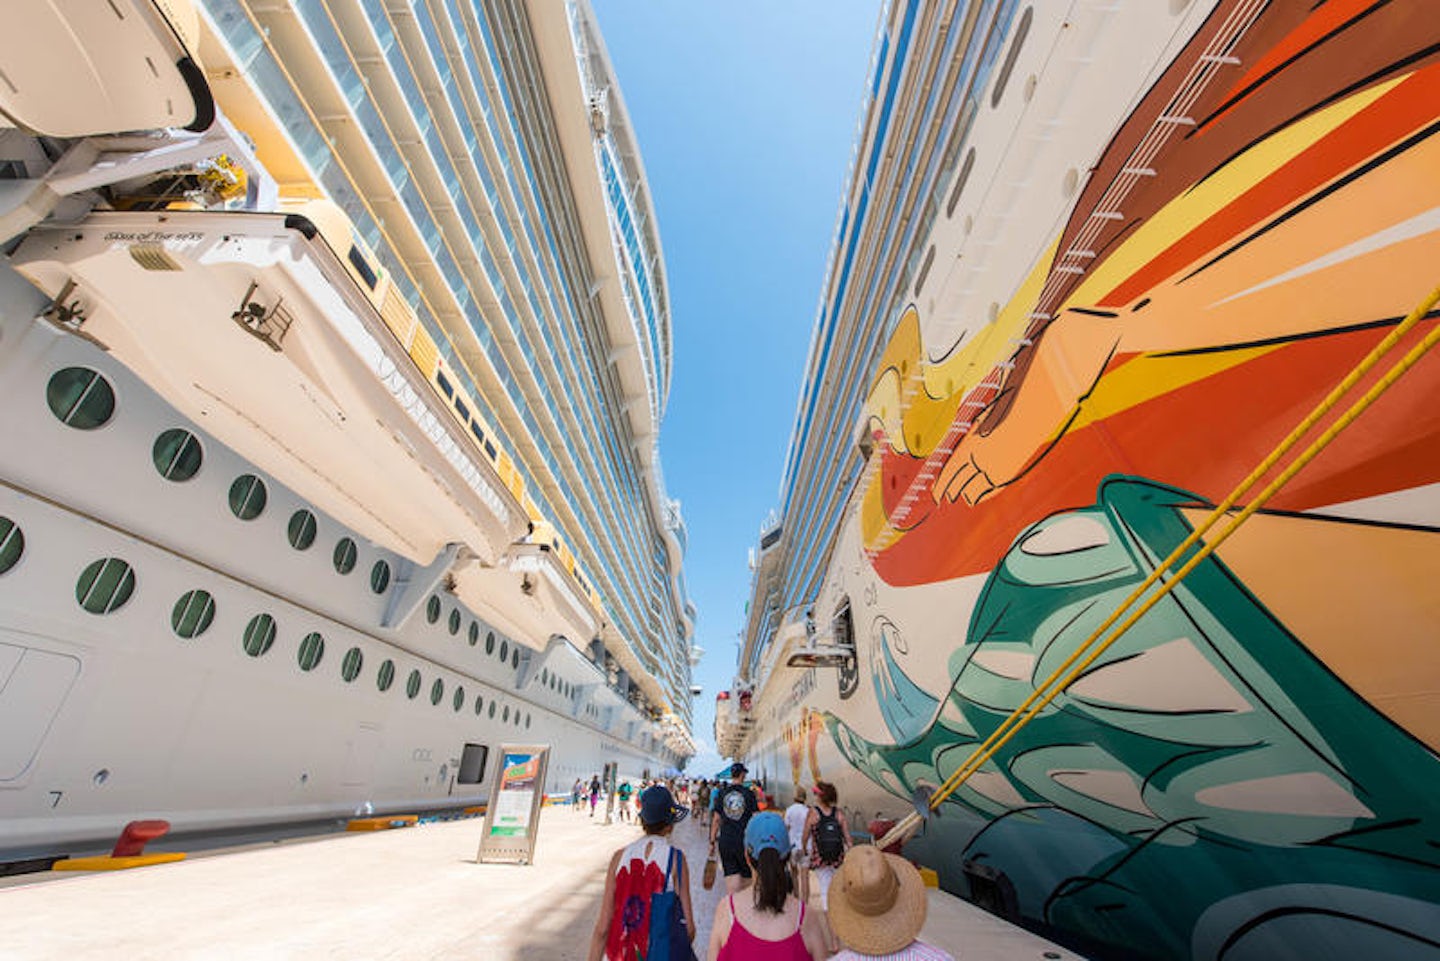 Cruise ships in Cozumel (Photo: Cruise Critic)